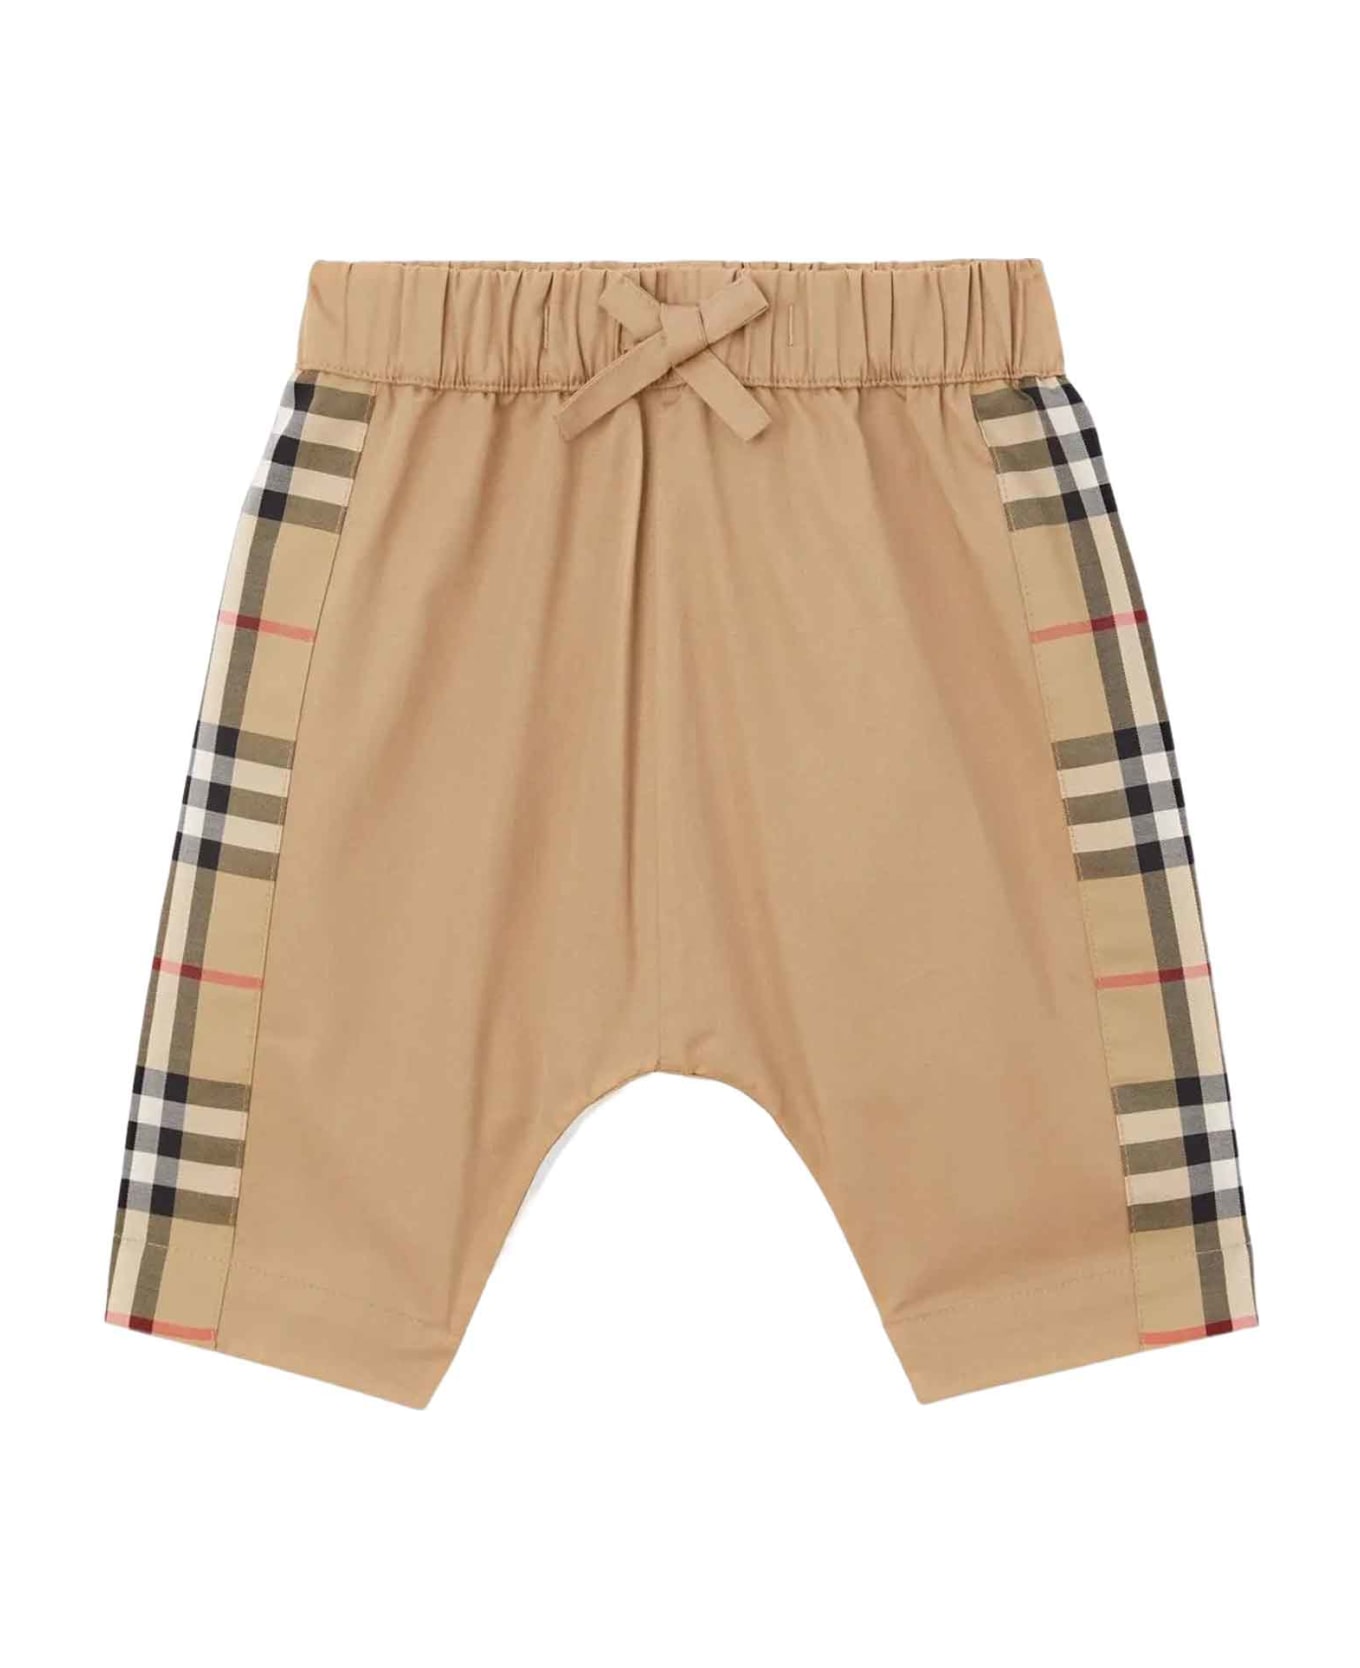 Burberry New Shorts Baby Unisex - New